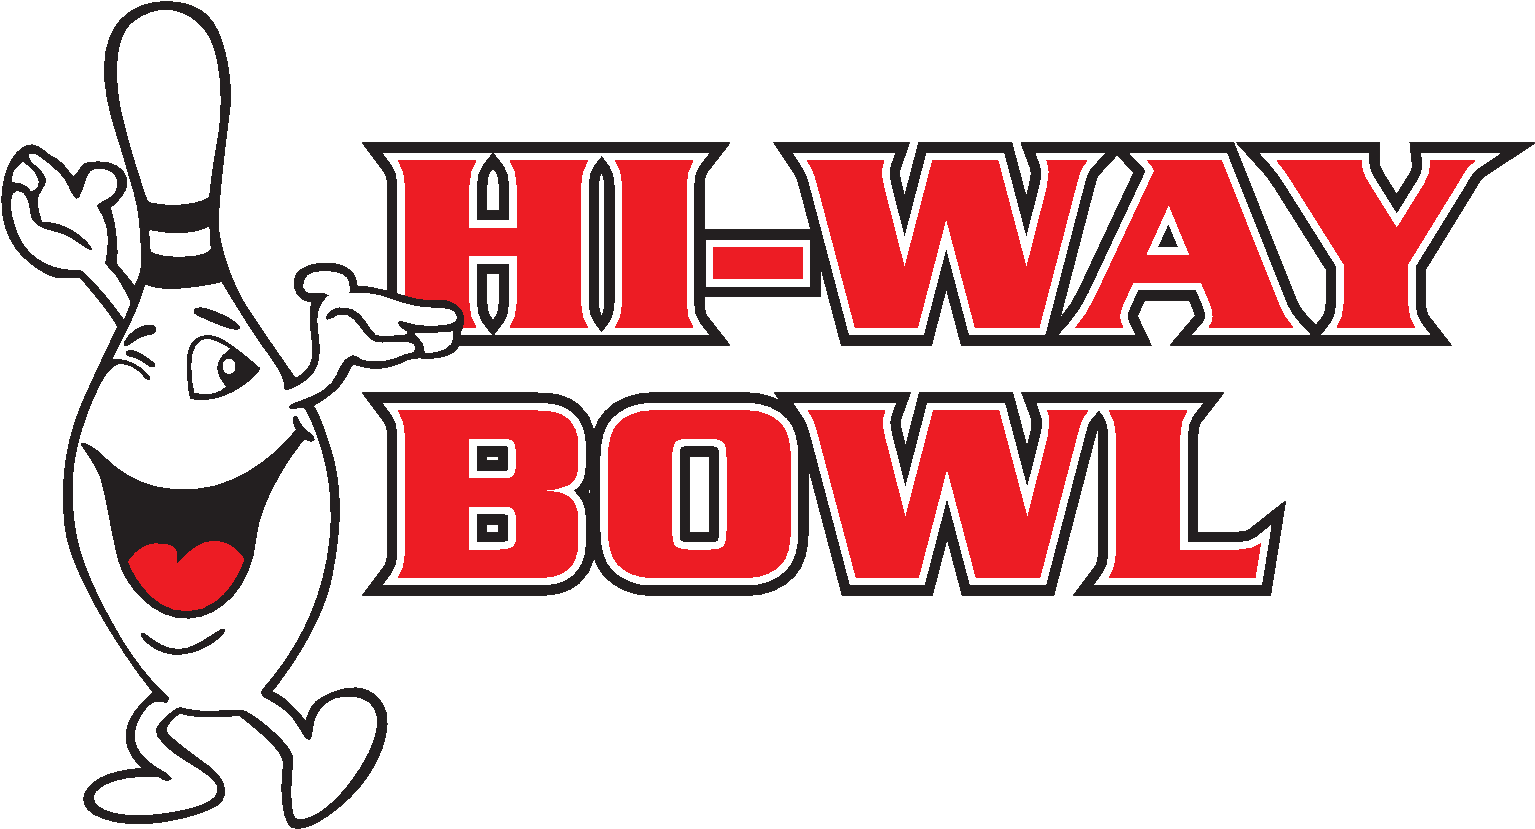 Hi-way Bowl In Sarnia, On - Hi-way Bowl (1649x858)